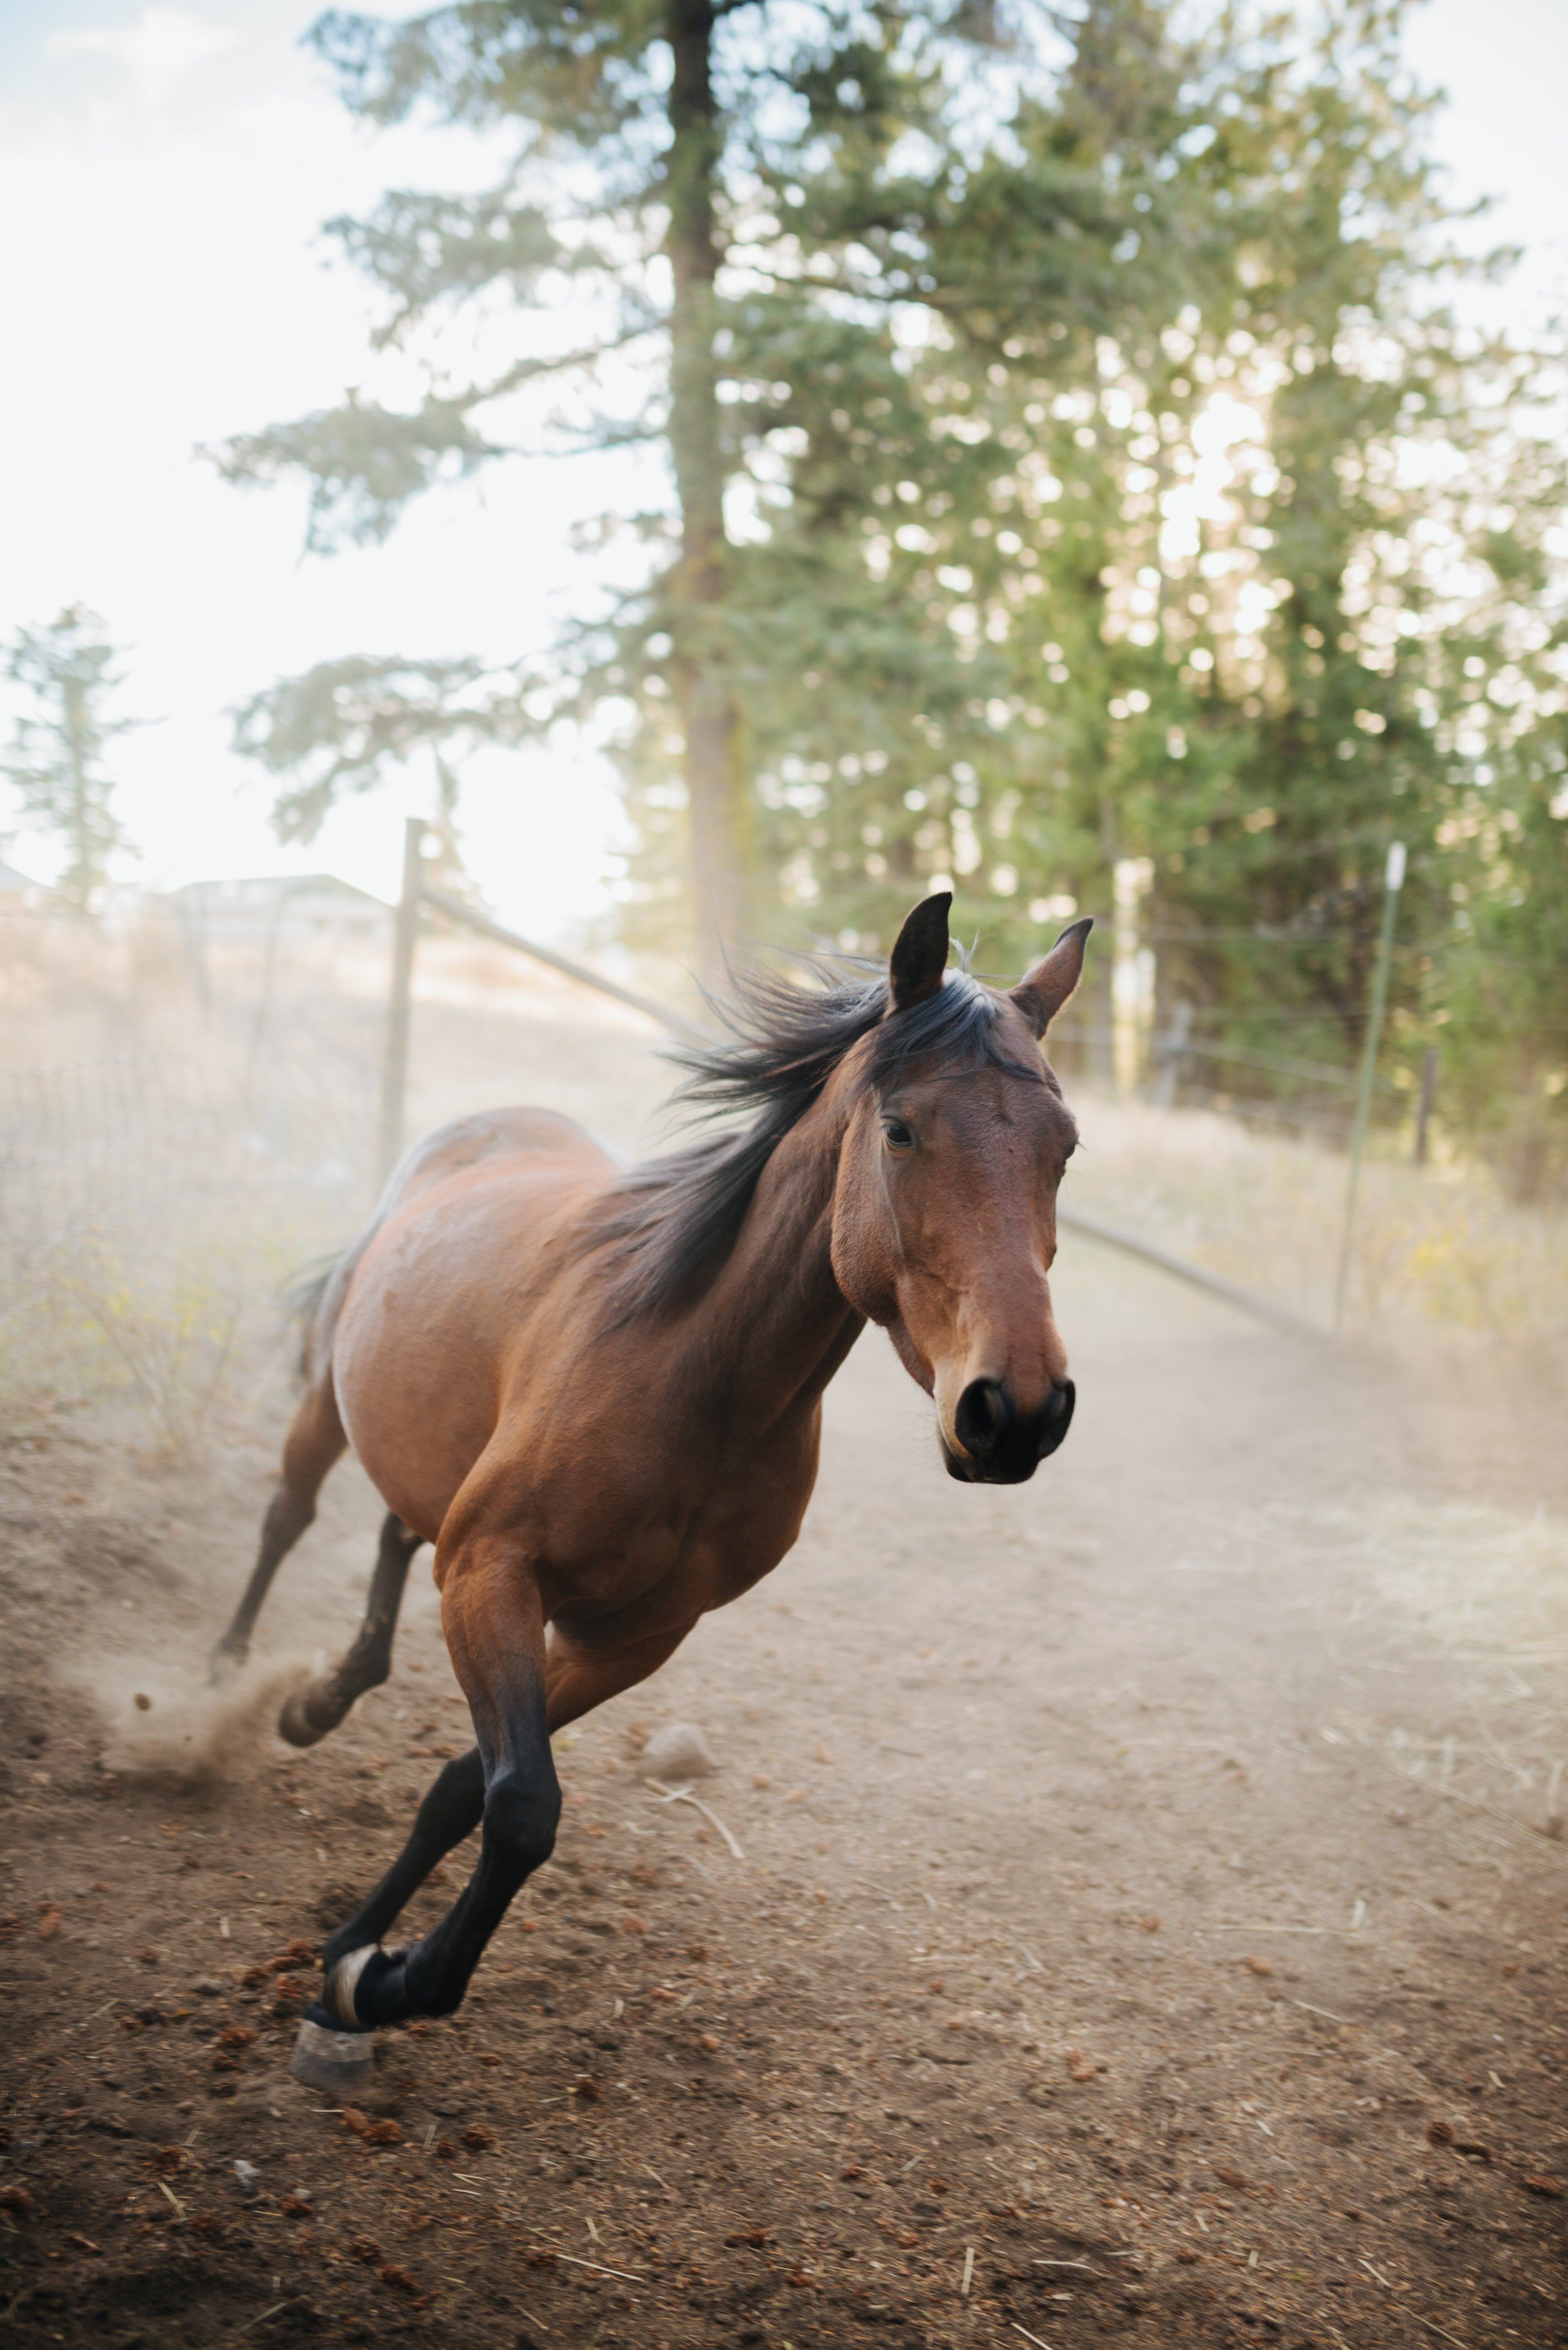 A horse runs on a dirt road in the sun. - Horse